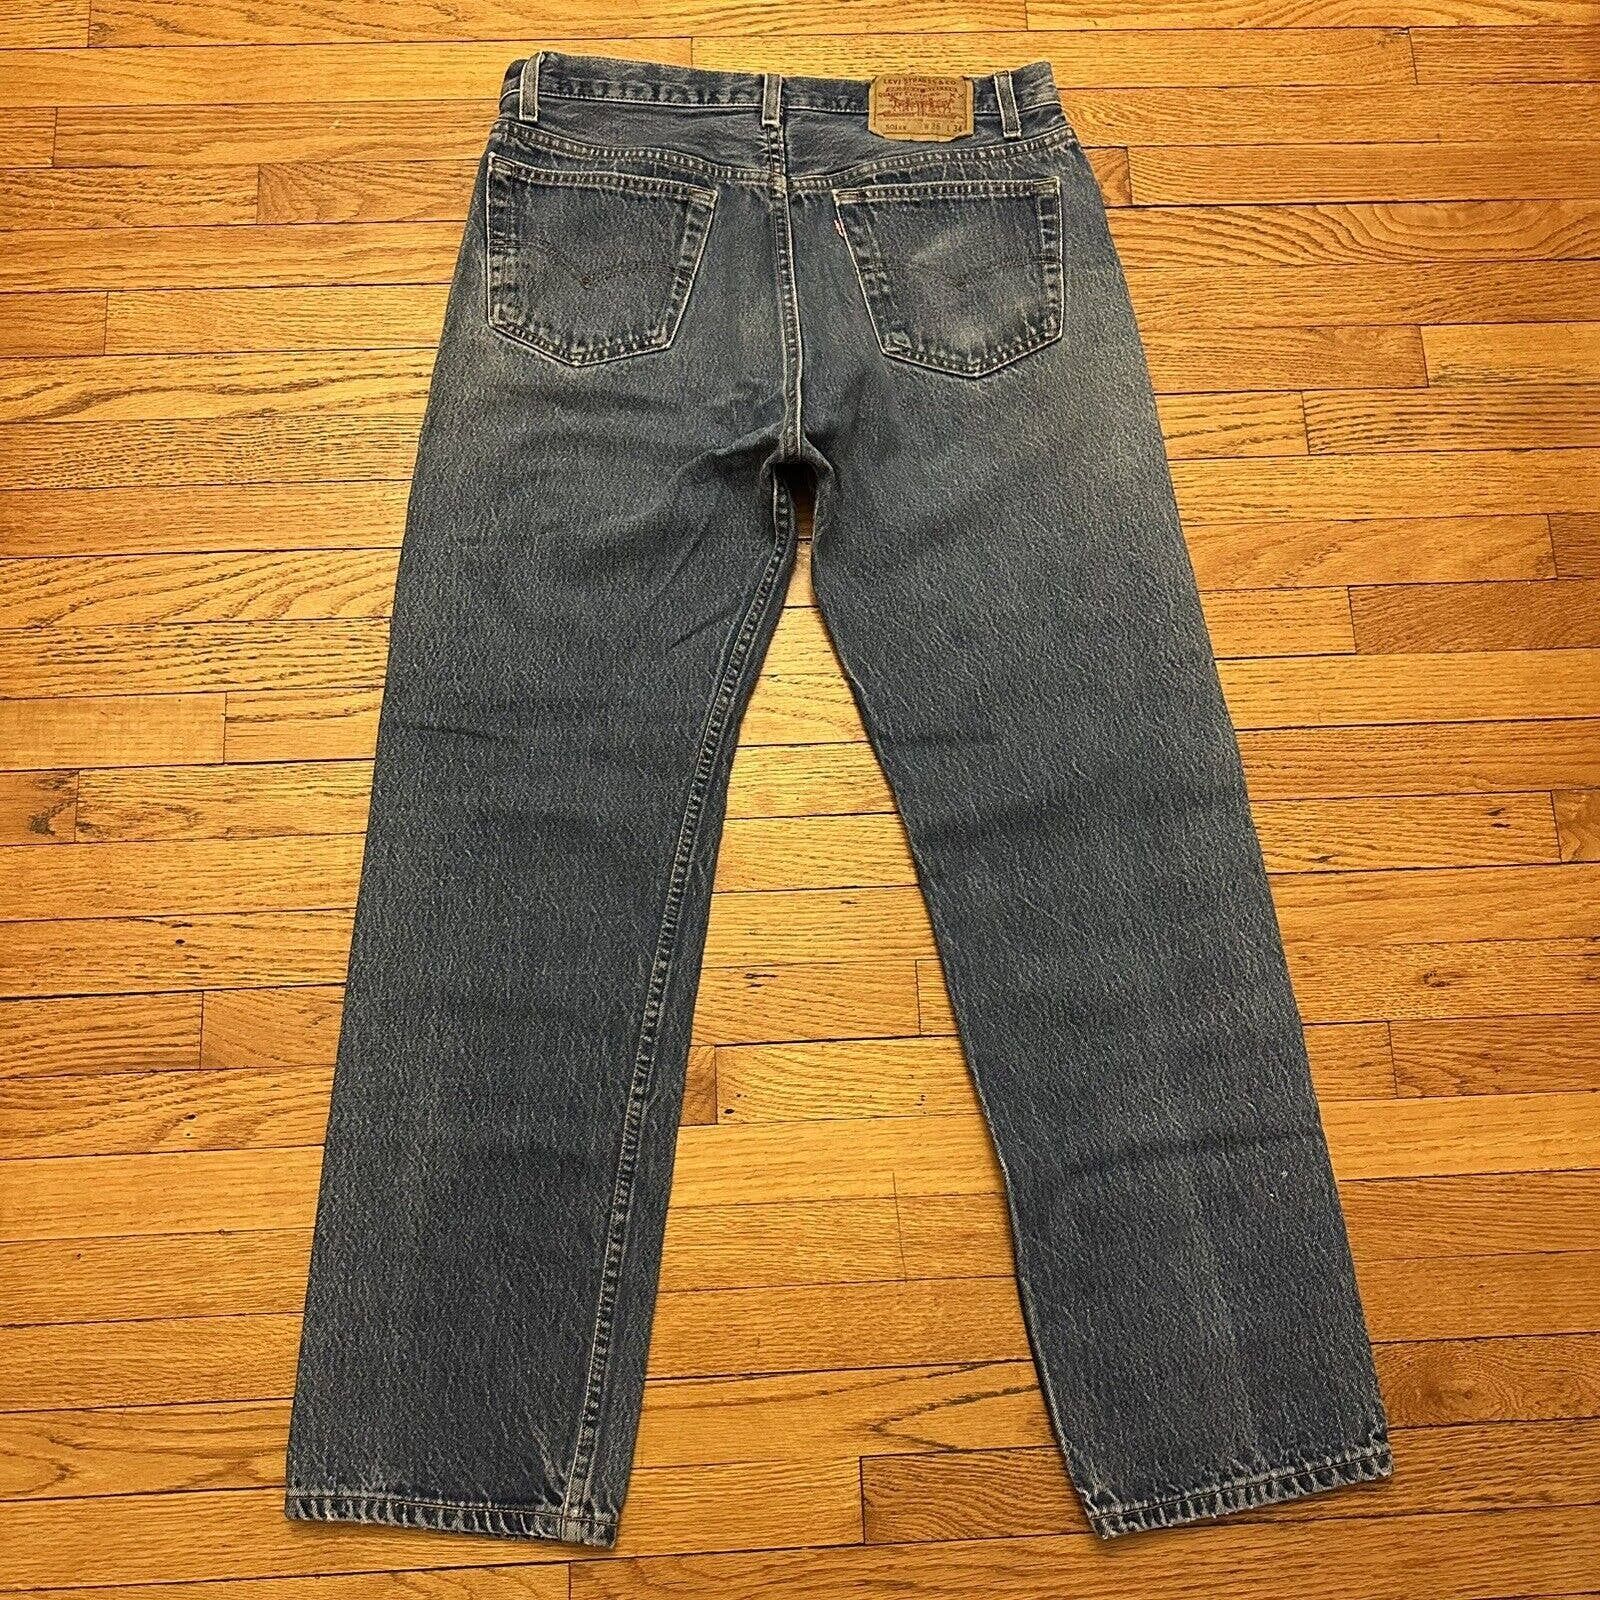 Vintage Vintage Levi’s 501 Blue Denim Jeans Size 36x34 Made In USA Size US 36 / EU 52 - 4 Thumbnail